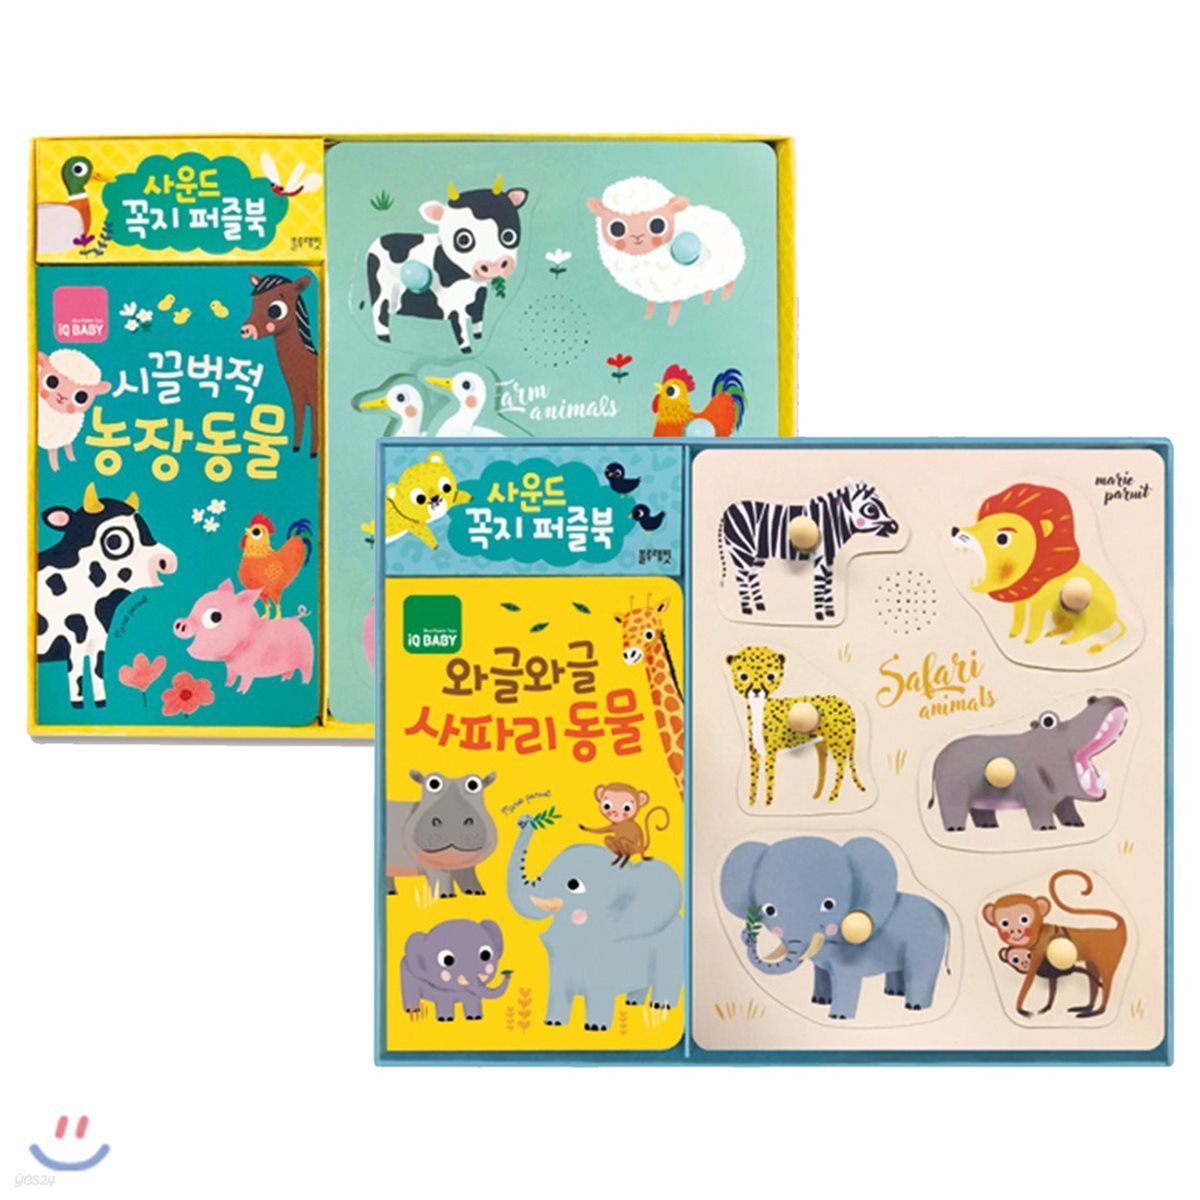 IQ Baby 사운드 꼭지 퍼즐북 2종 세트: 와글와글 사파리 동물 + 시끌벅적 농장 동물